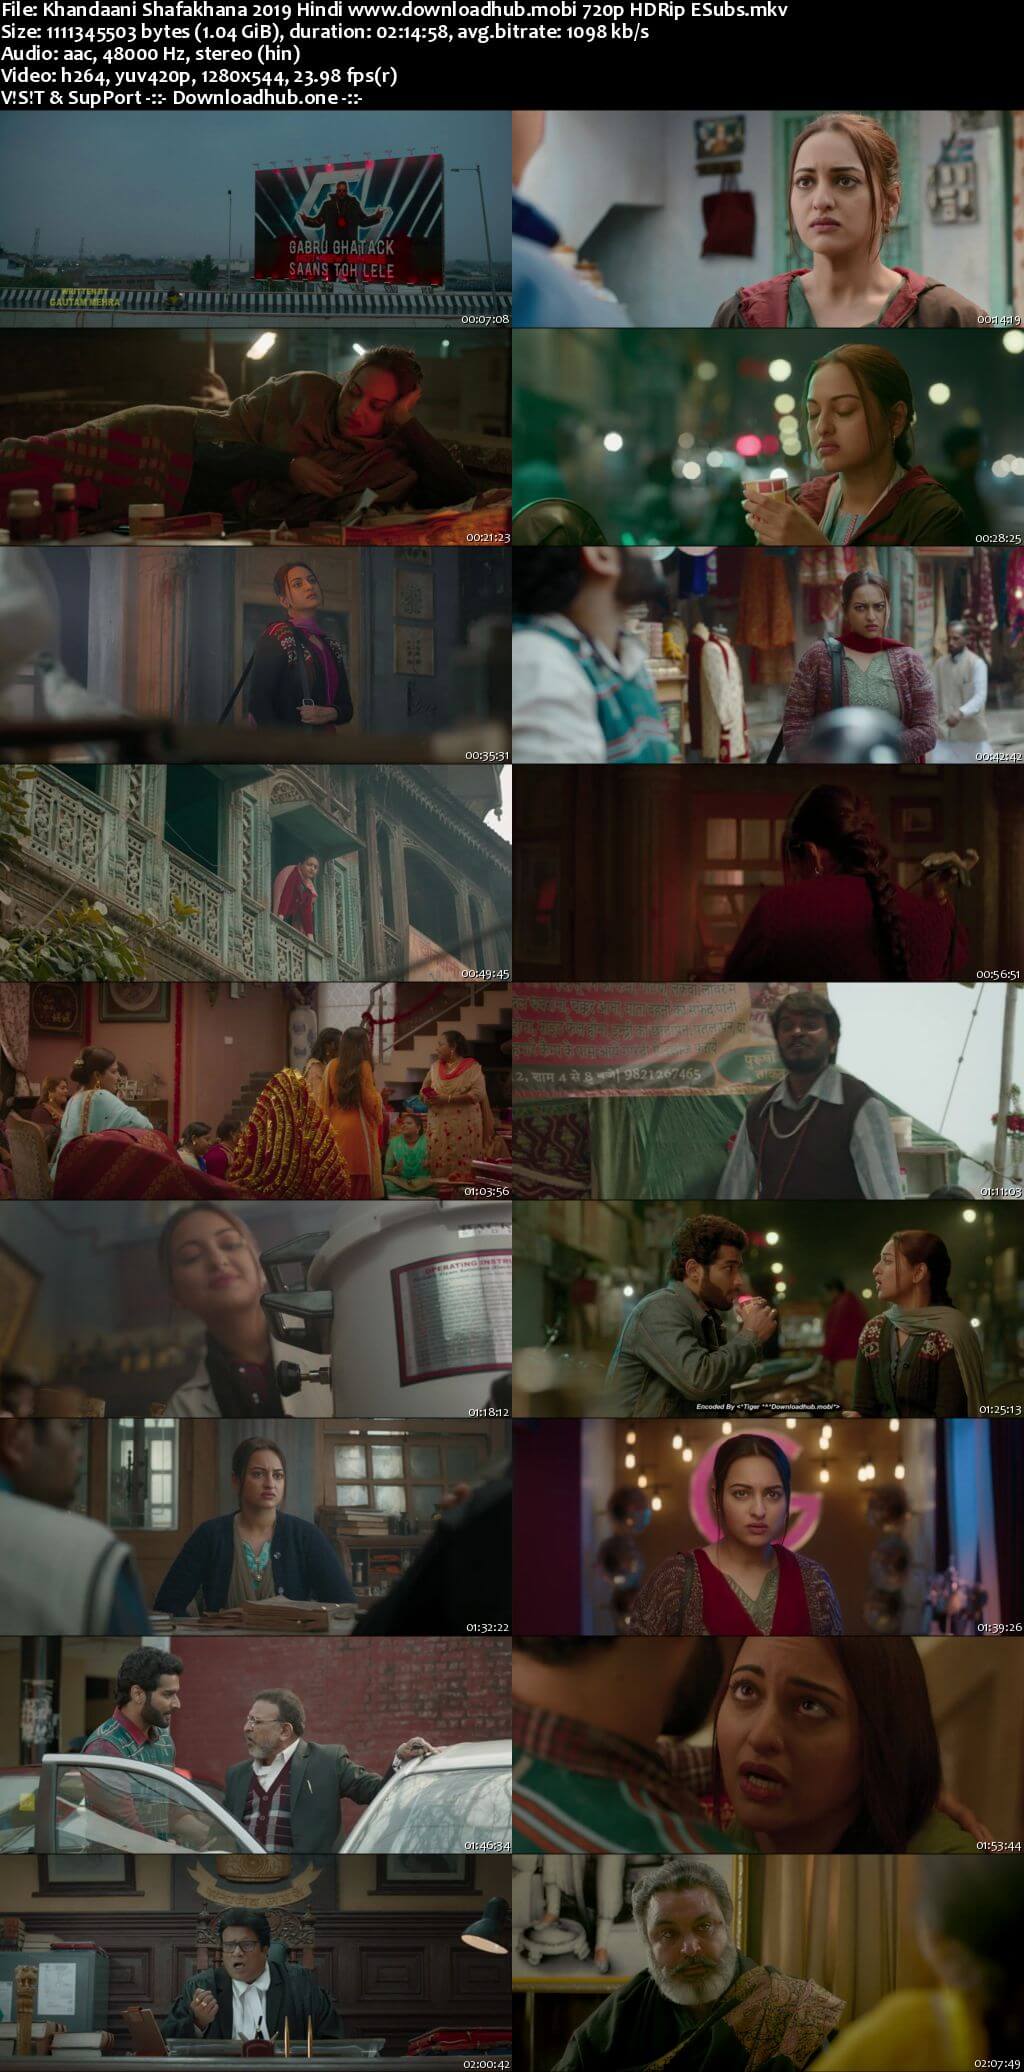 Khandaani Shafakhana 2019 Hindi 720p HDRip ESubs